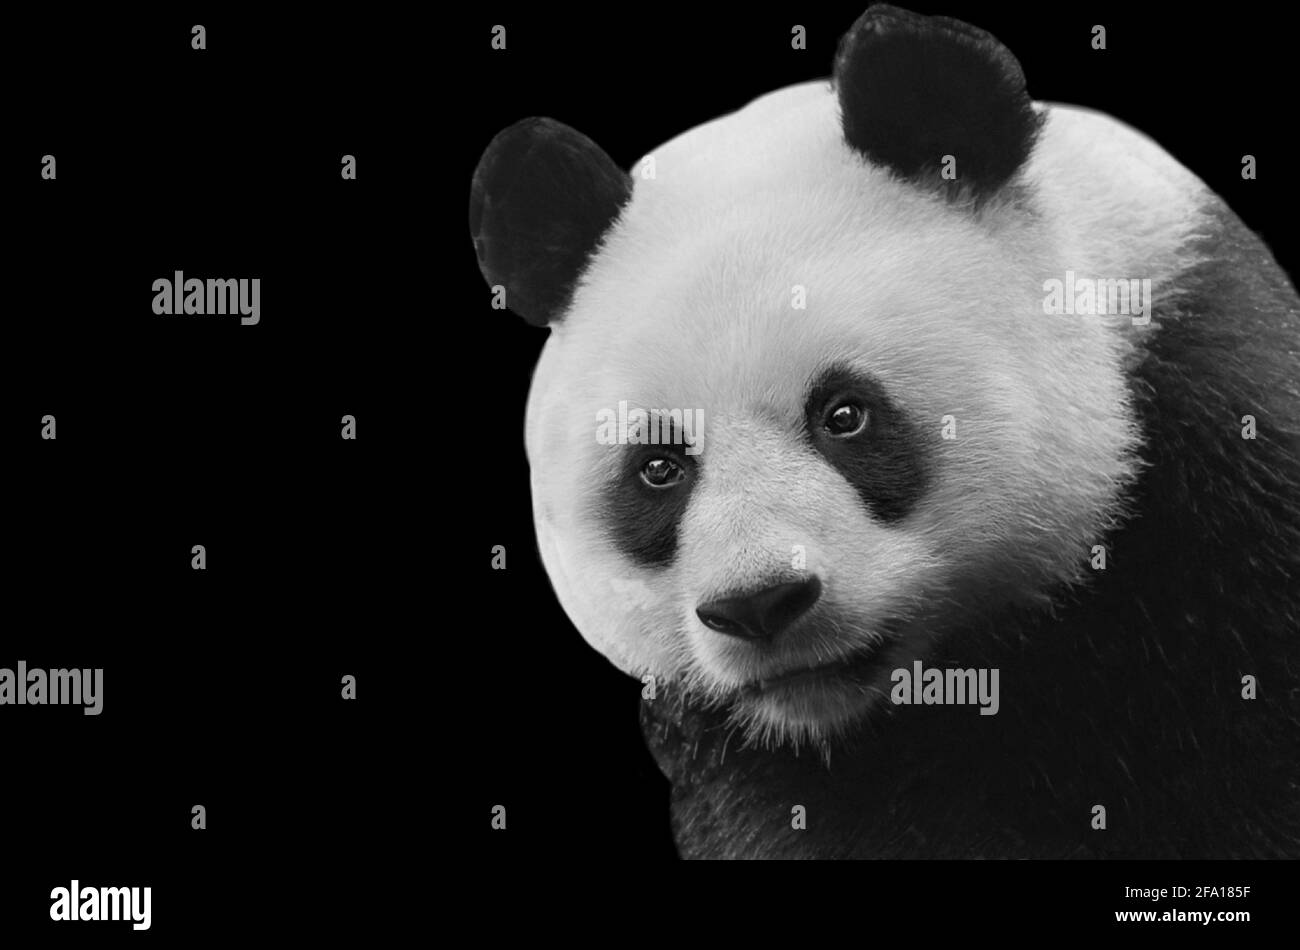 Cute Black And White Panda Closeup Face Stock Photo